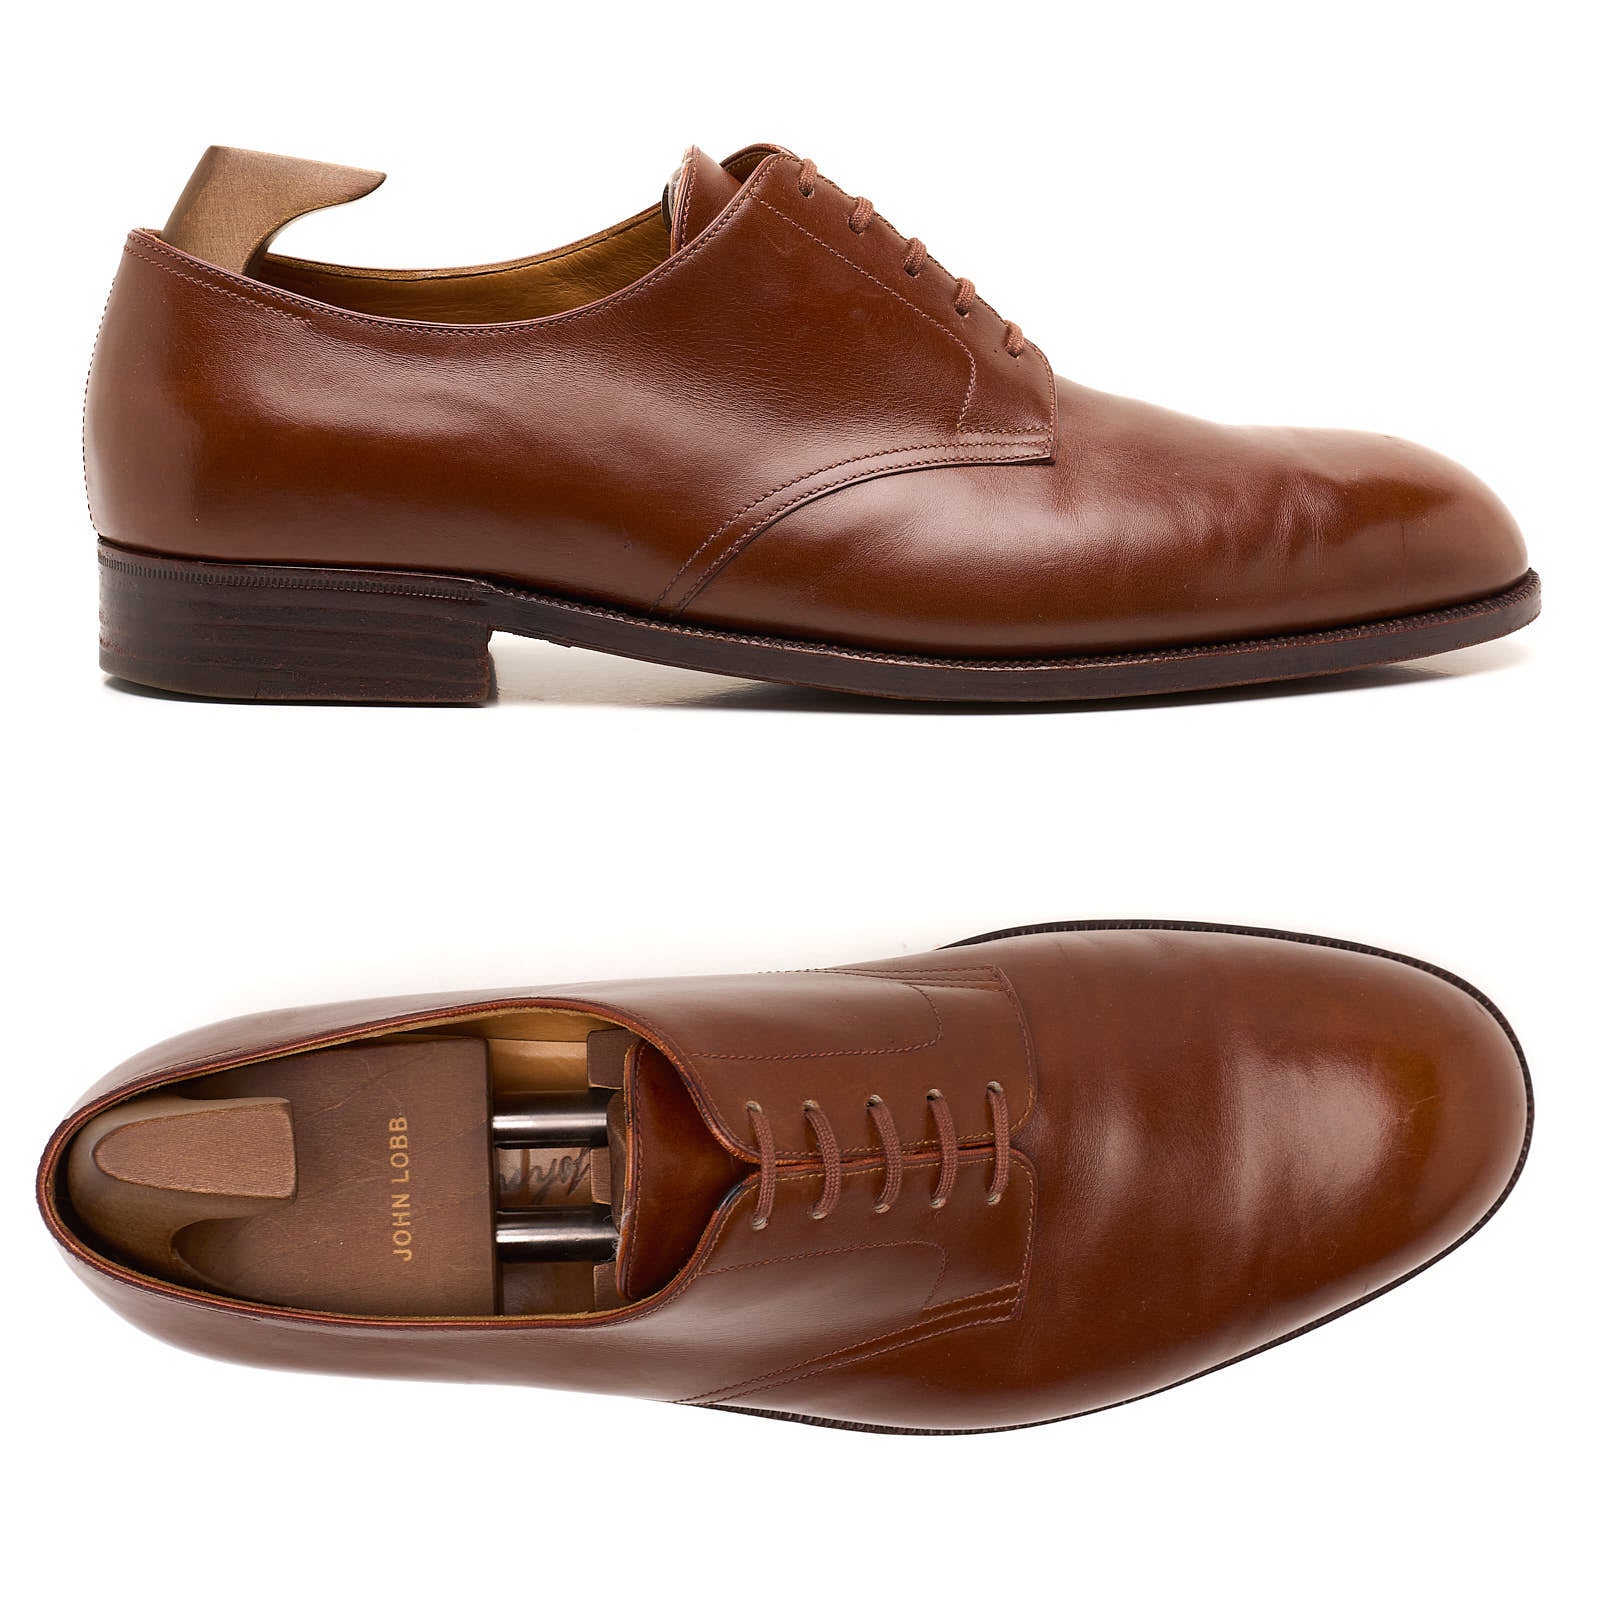 JOHN LOBB Paris Bespoke Brown Calf Leather 5 Eyelet Derby Shoes UK 11 US 12